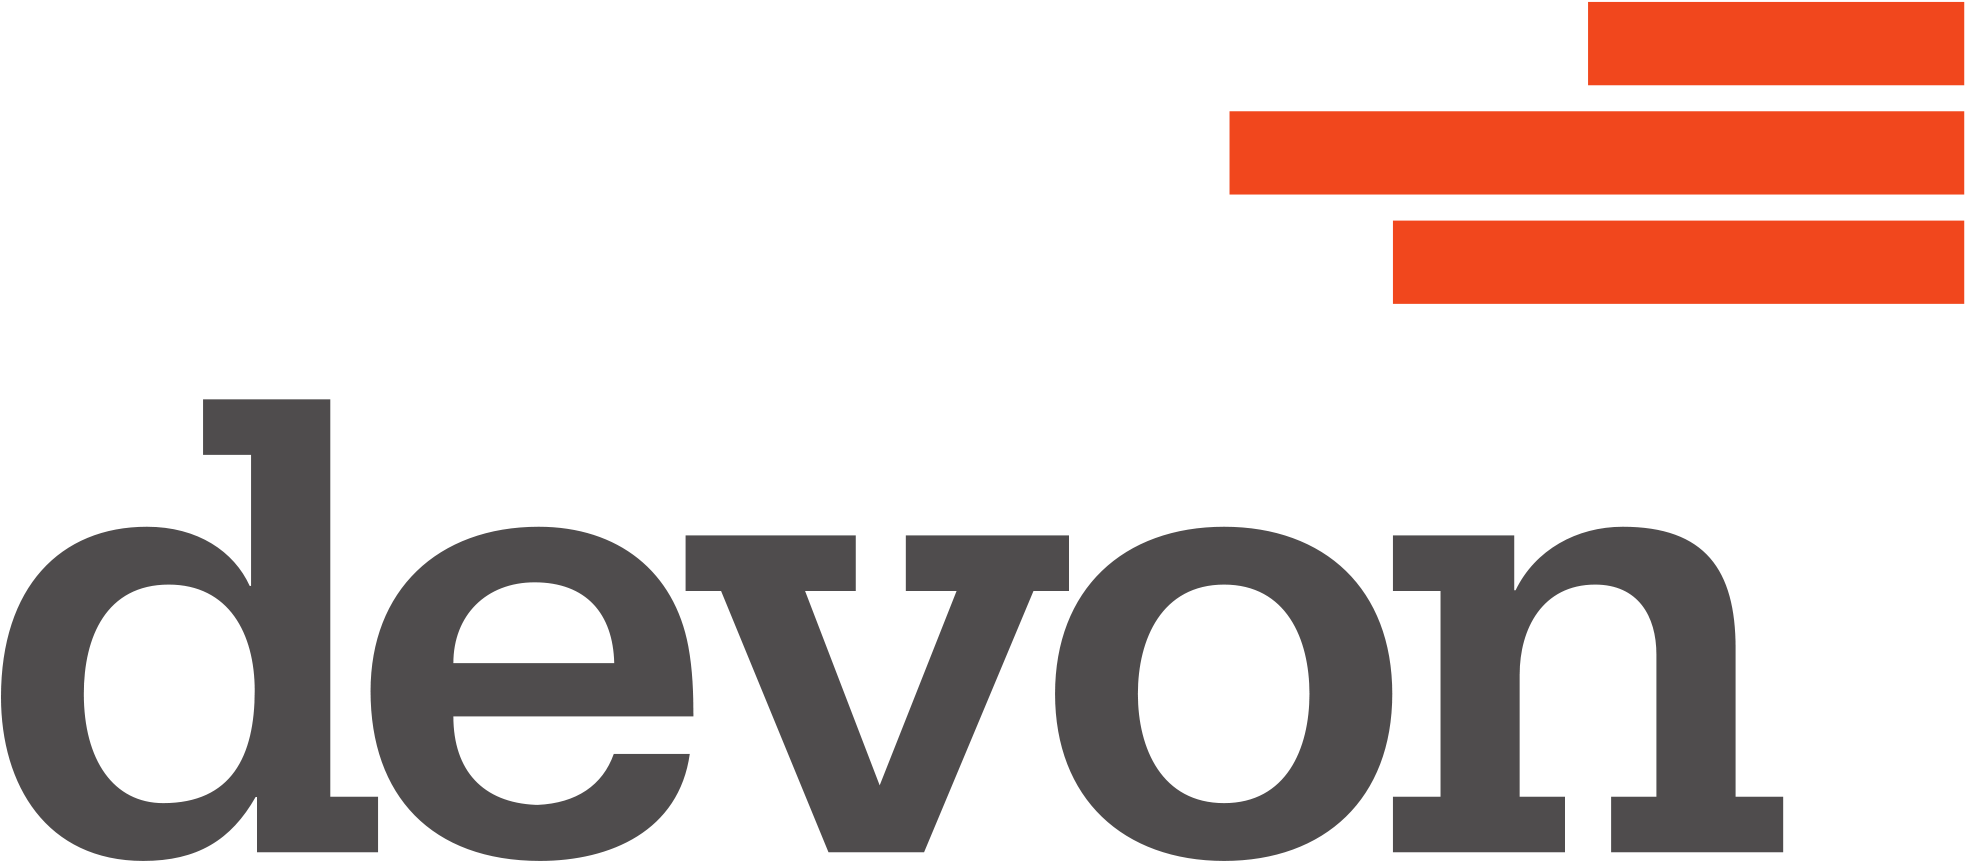 7, Devon Energy - Devon Energy Logo Clipart (2000x898), Png Download